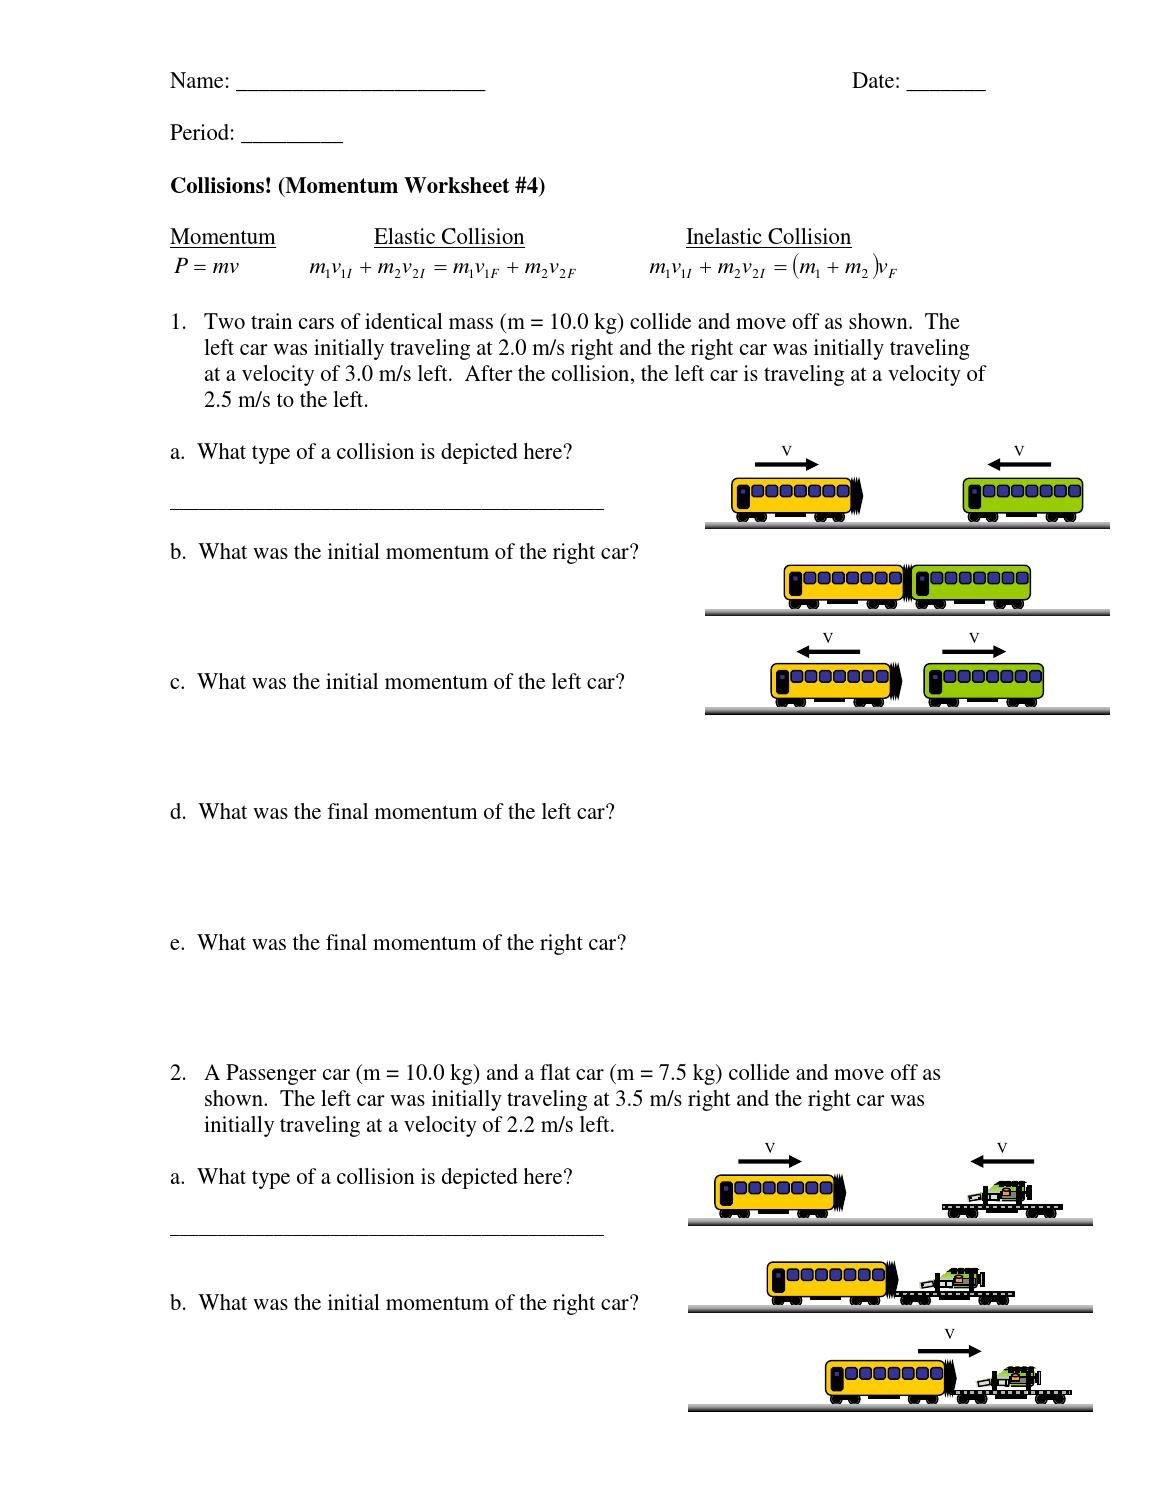 Inelastic Collisions Worksheet Studentemlyn Majoos  Issuu Along With Collisions Momentum Worksheet 4 Answers